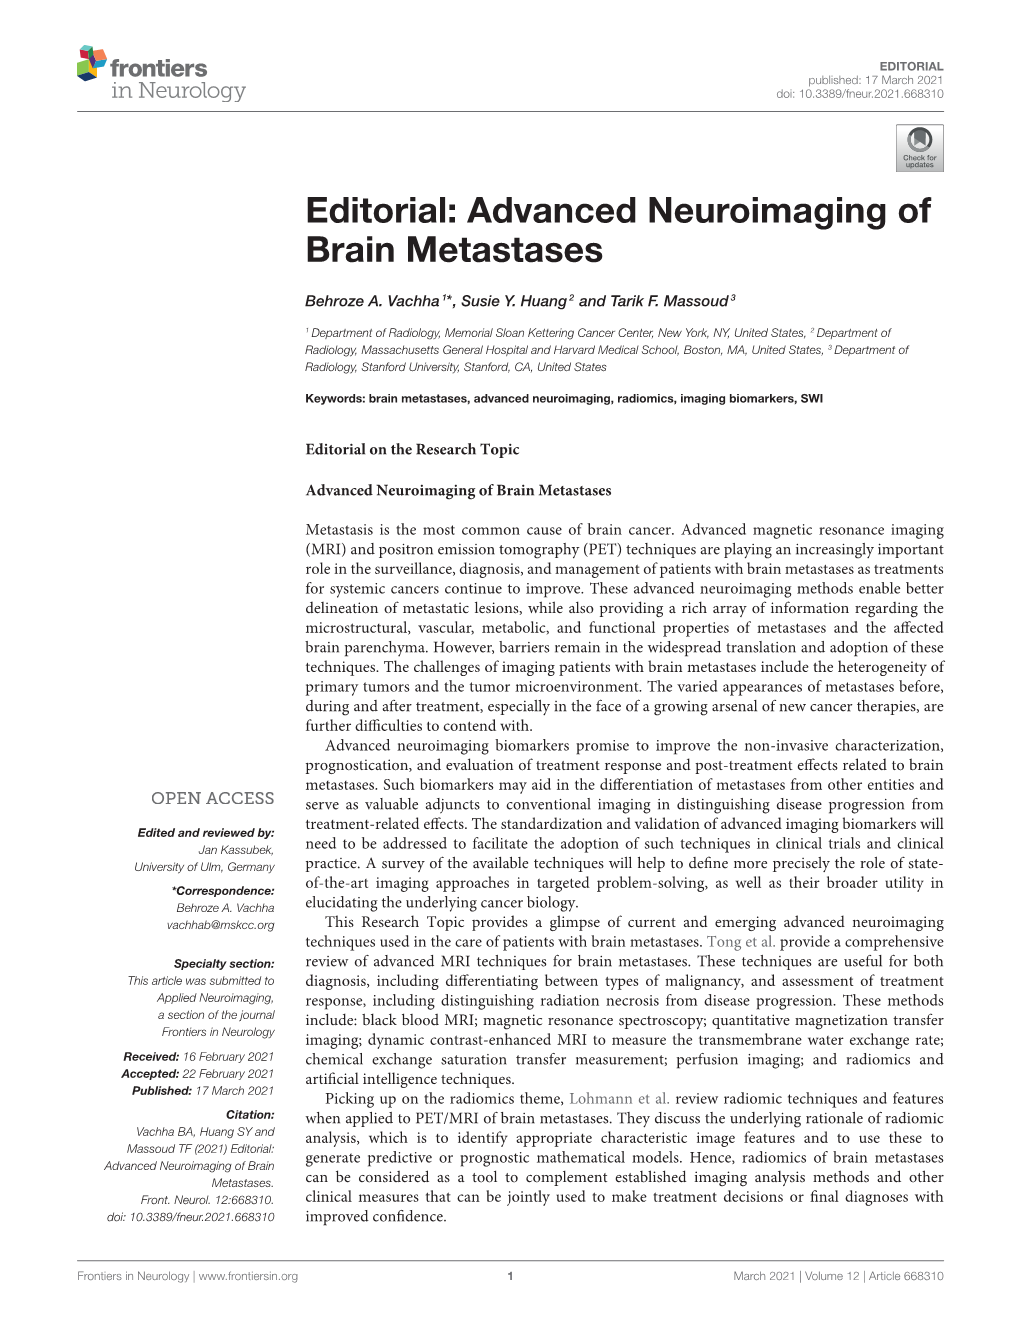 Advanced Neuroimaging of Brain Metastases